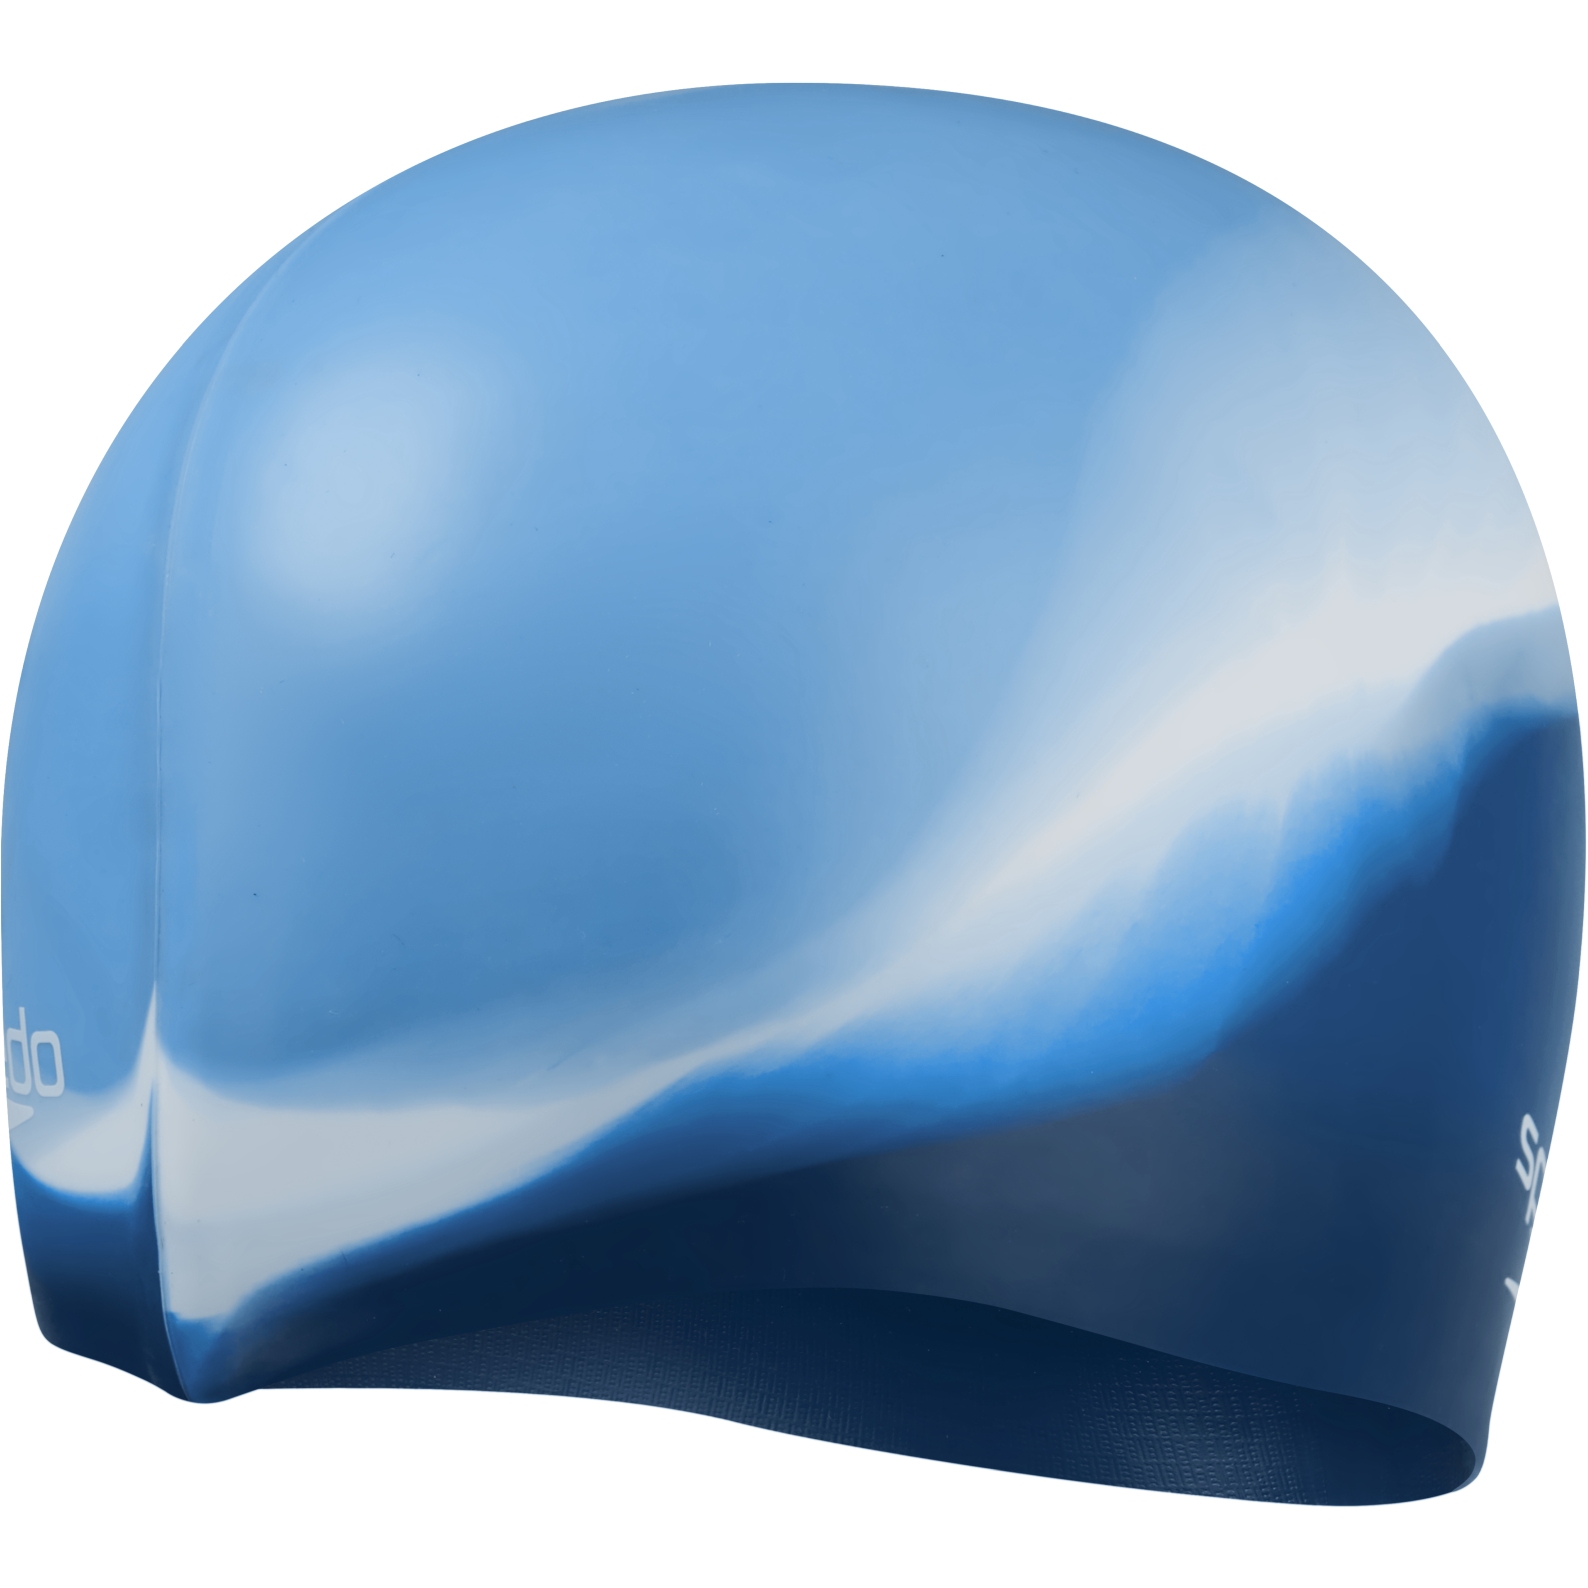 Produktbild von Speedo Multi Colour Badekappe - blissful blue/aegean blue/white